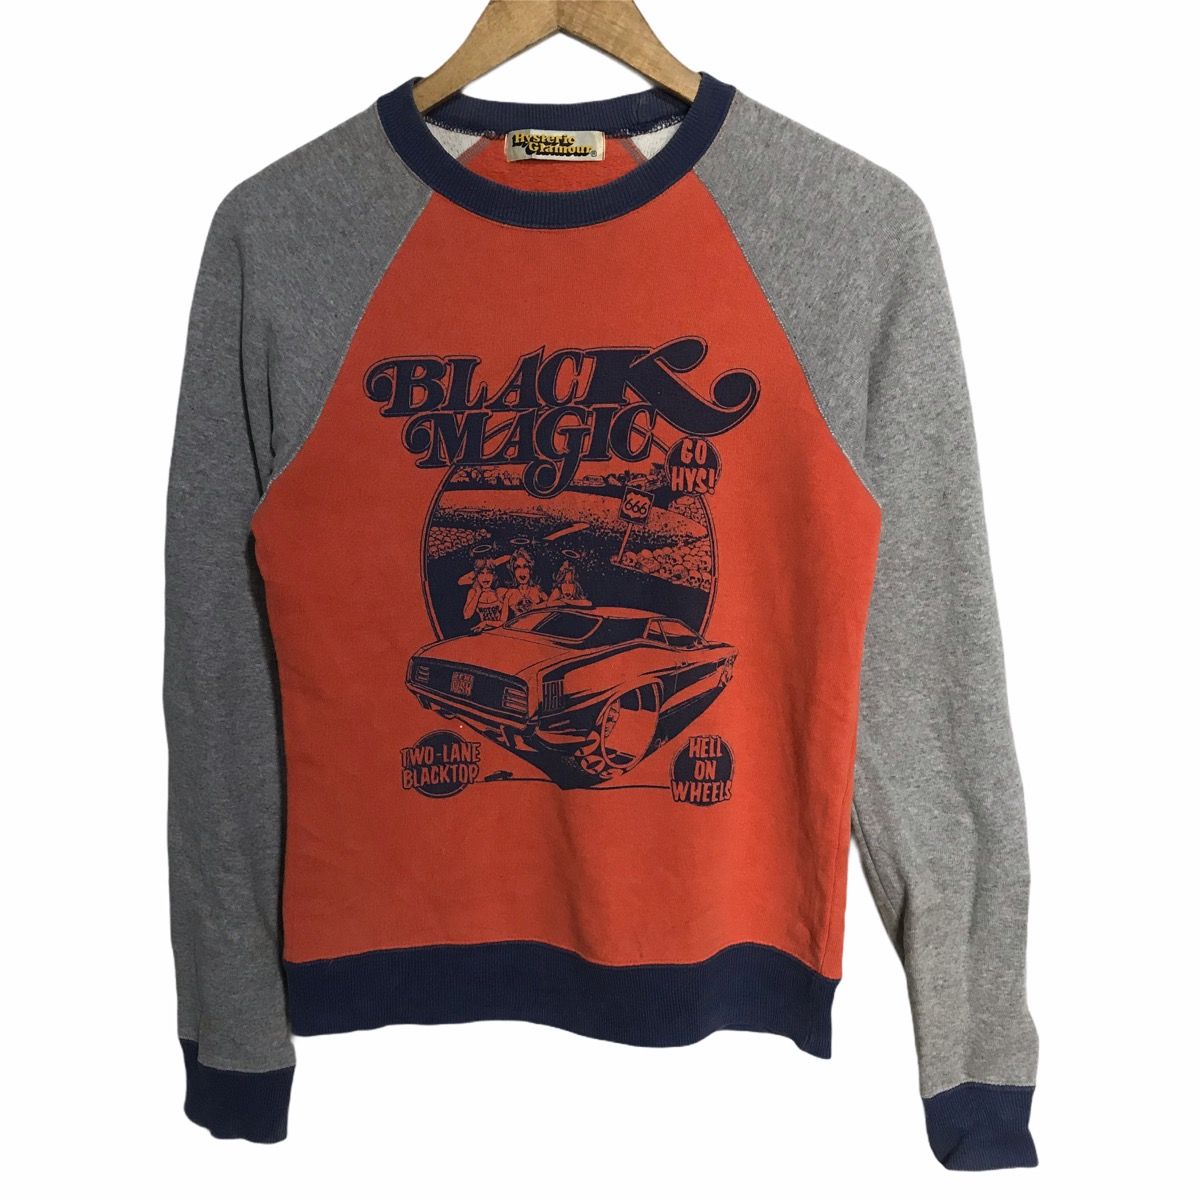 Vintage hysteric glamour sweatshirt - 1